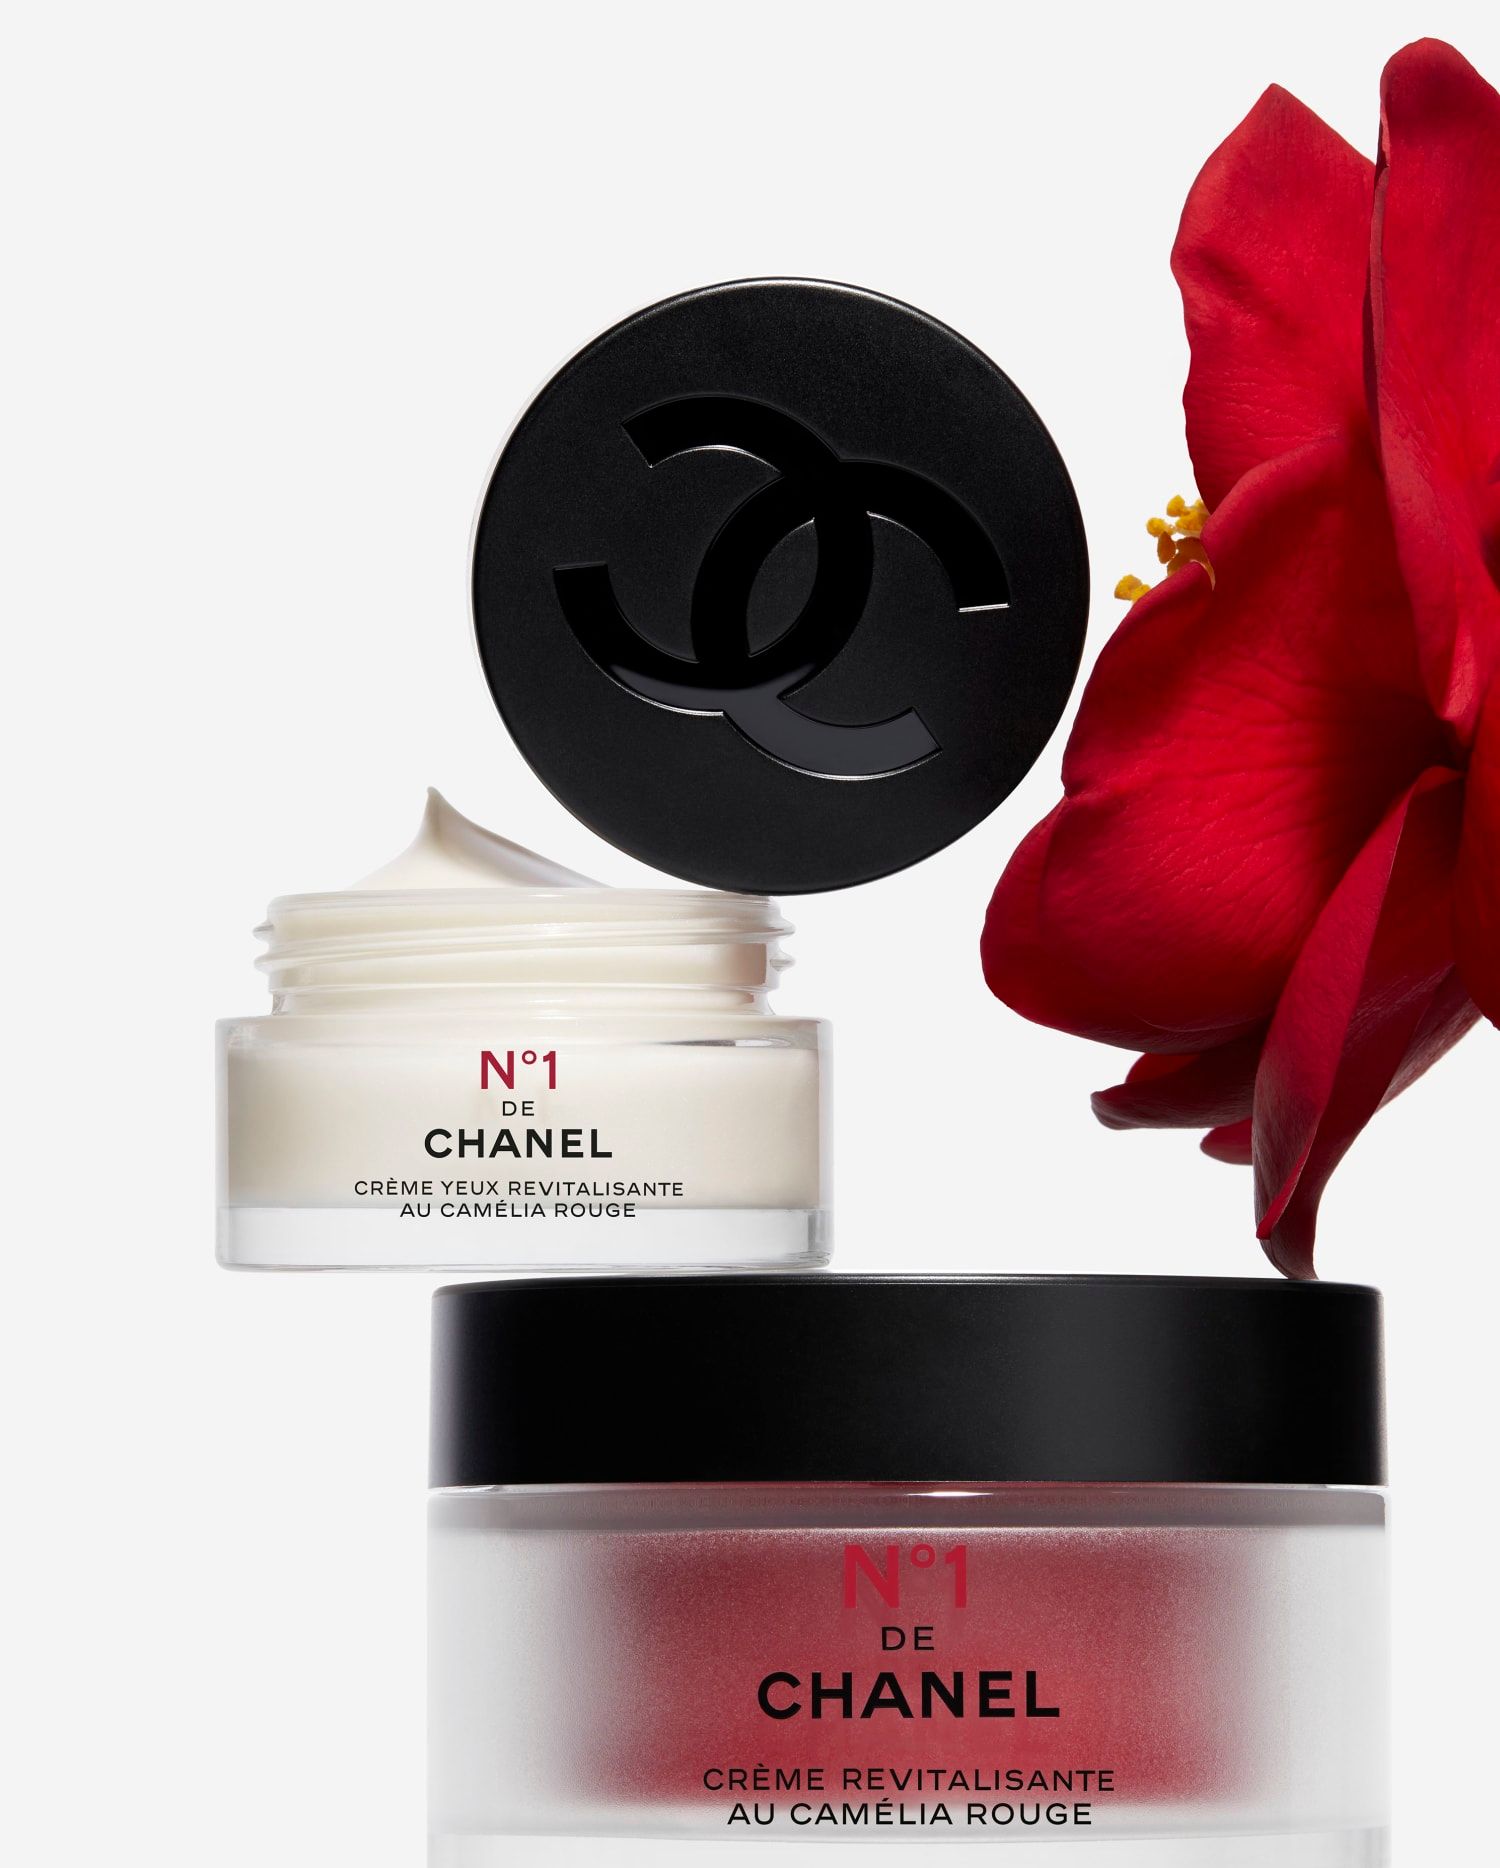 Red Camellia The Power Flower In N1 De Chanel Anti Aging Beauty Line